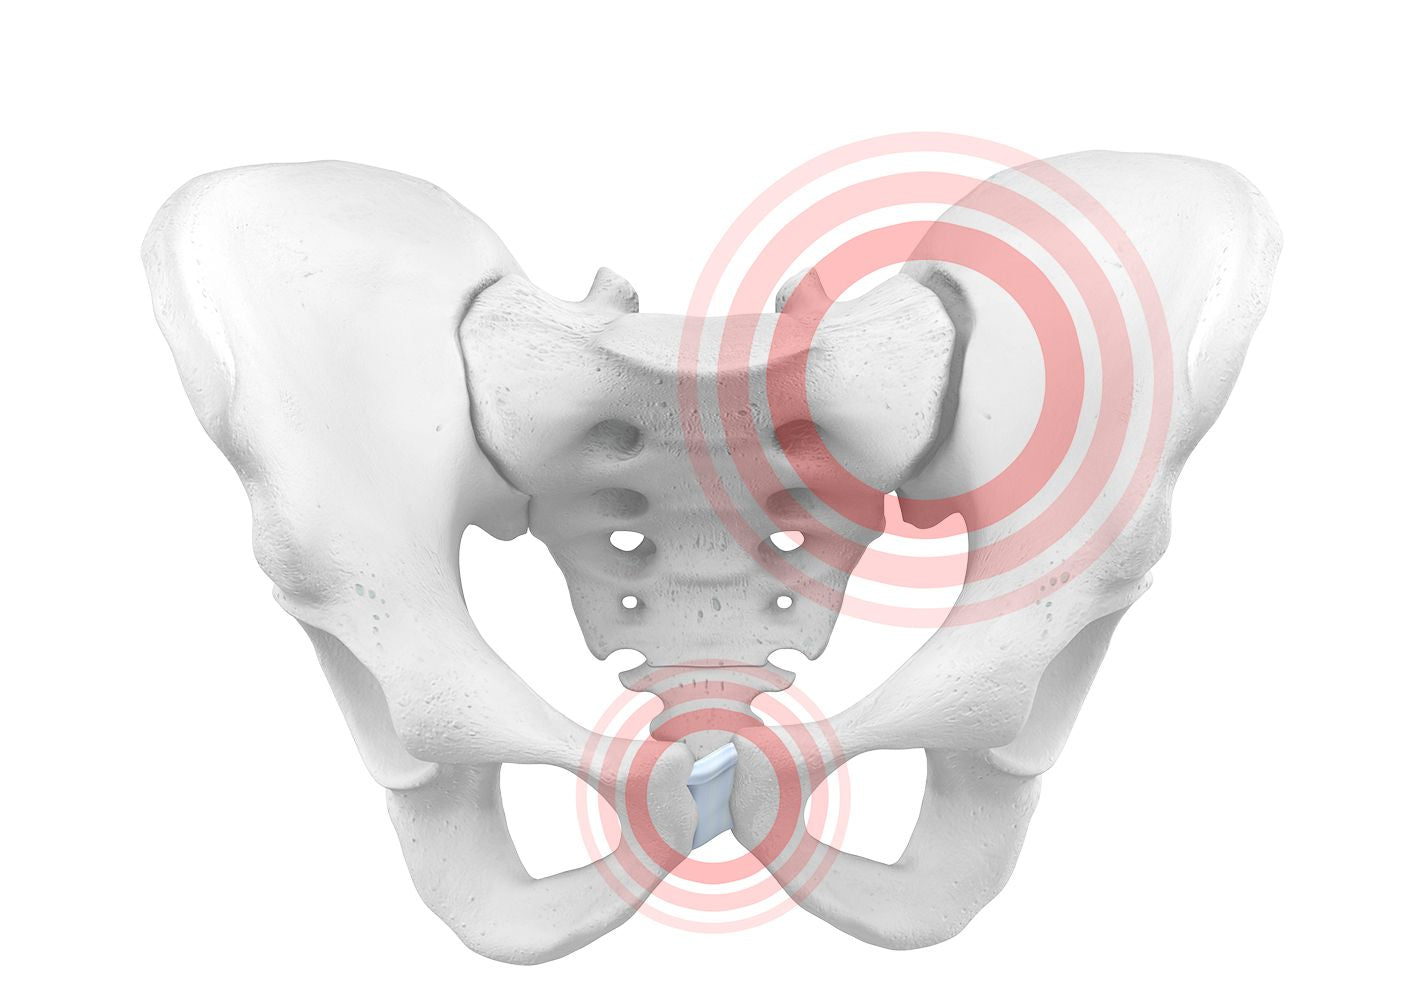 Skeletal diagram of the pelvic girdle